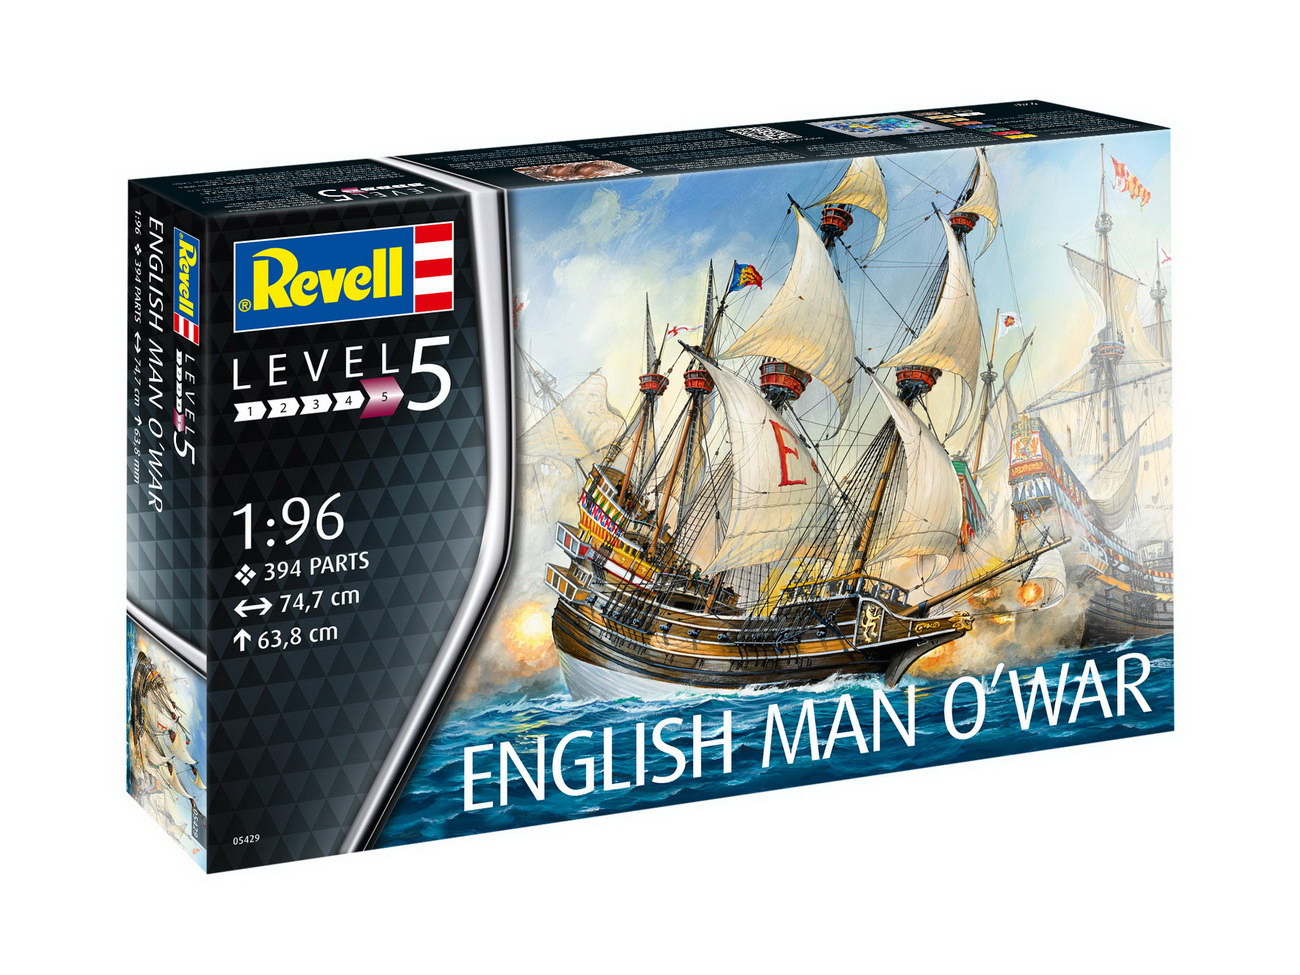 Revell 05429 - English Man O'War - Segelschiff Modell